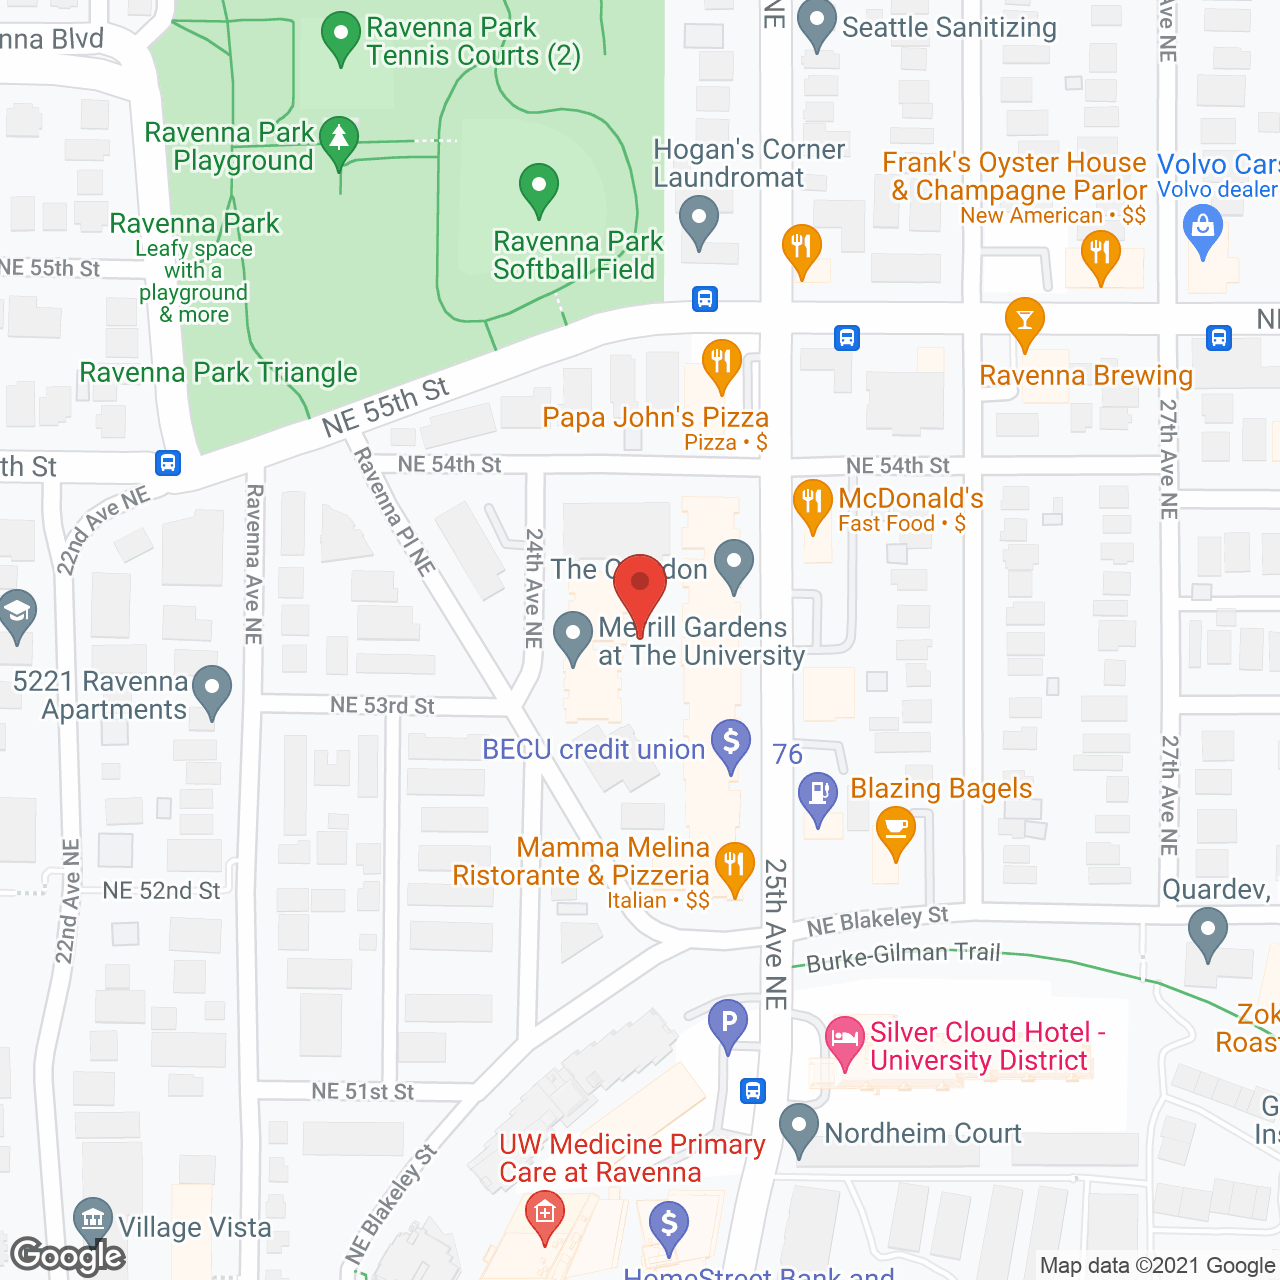 Merrill Gardens at The University in google map